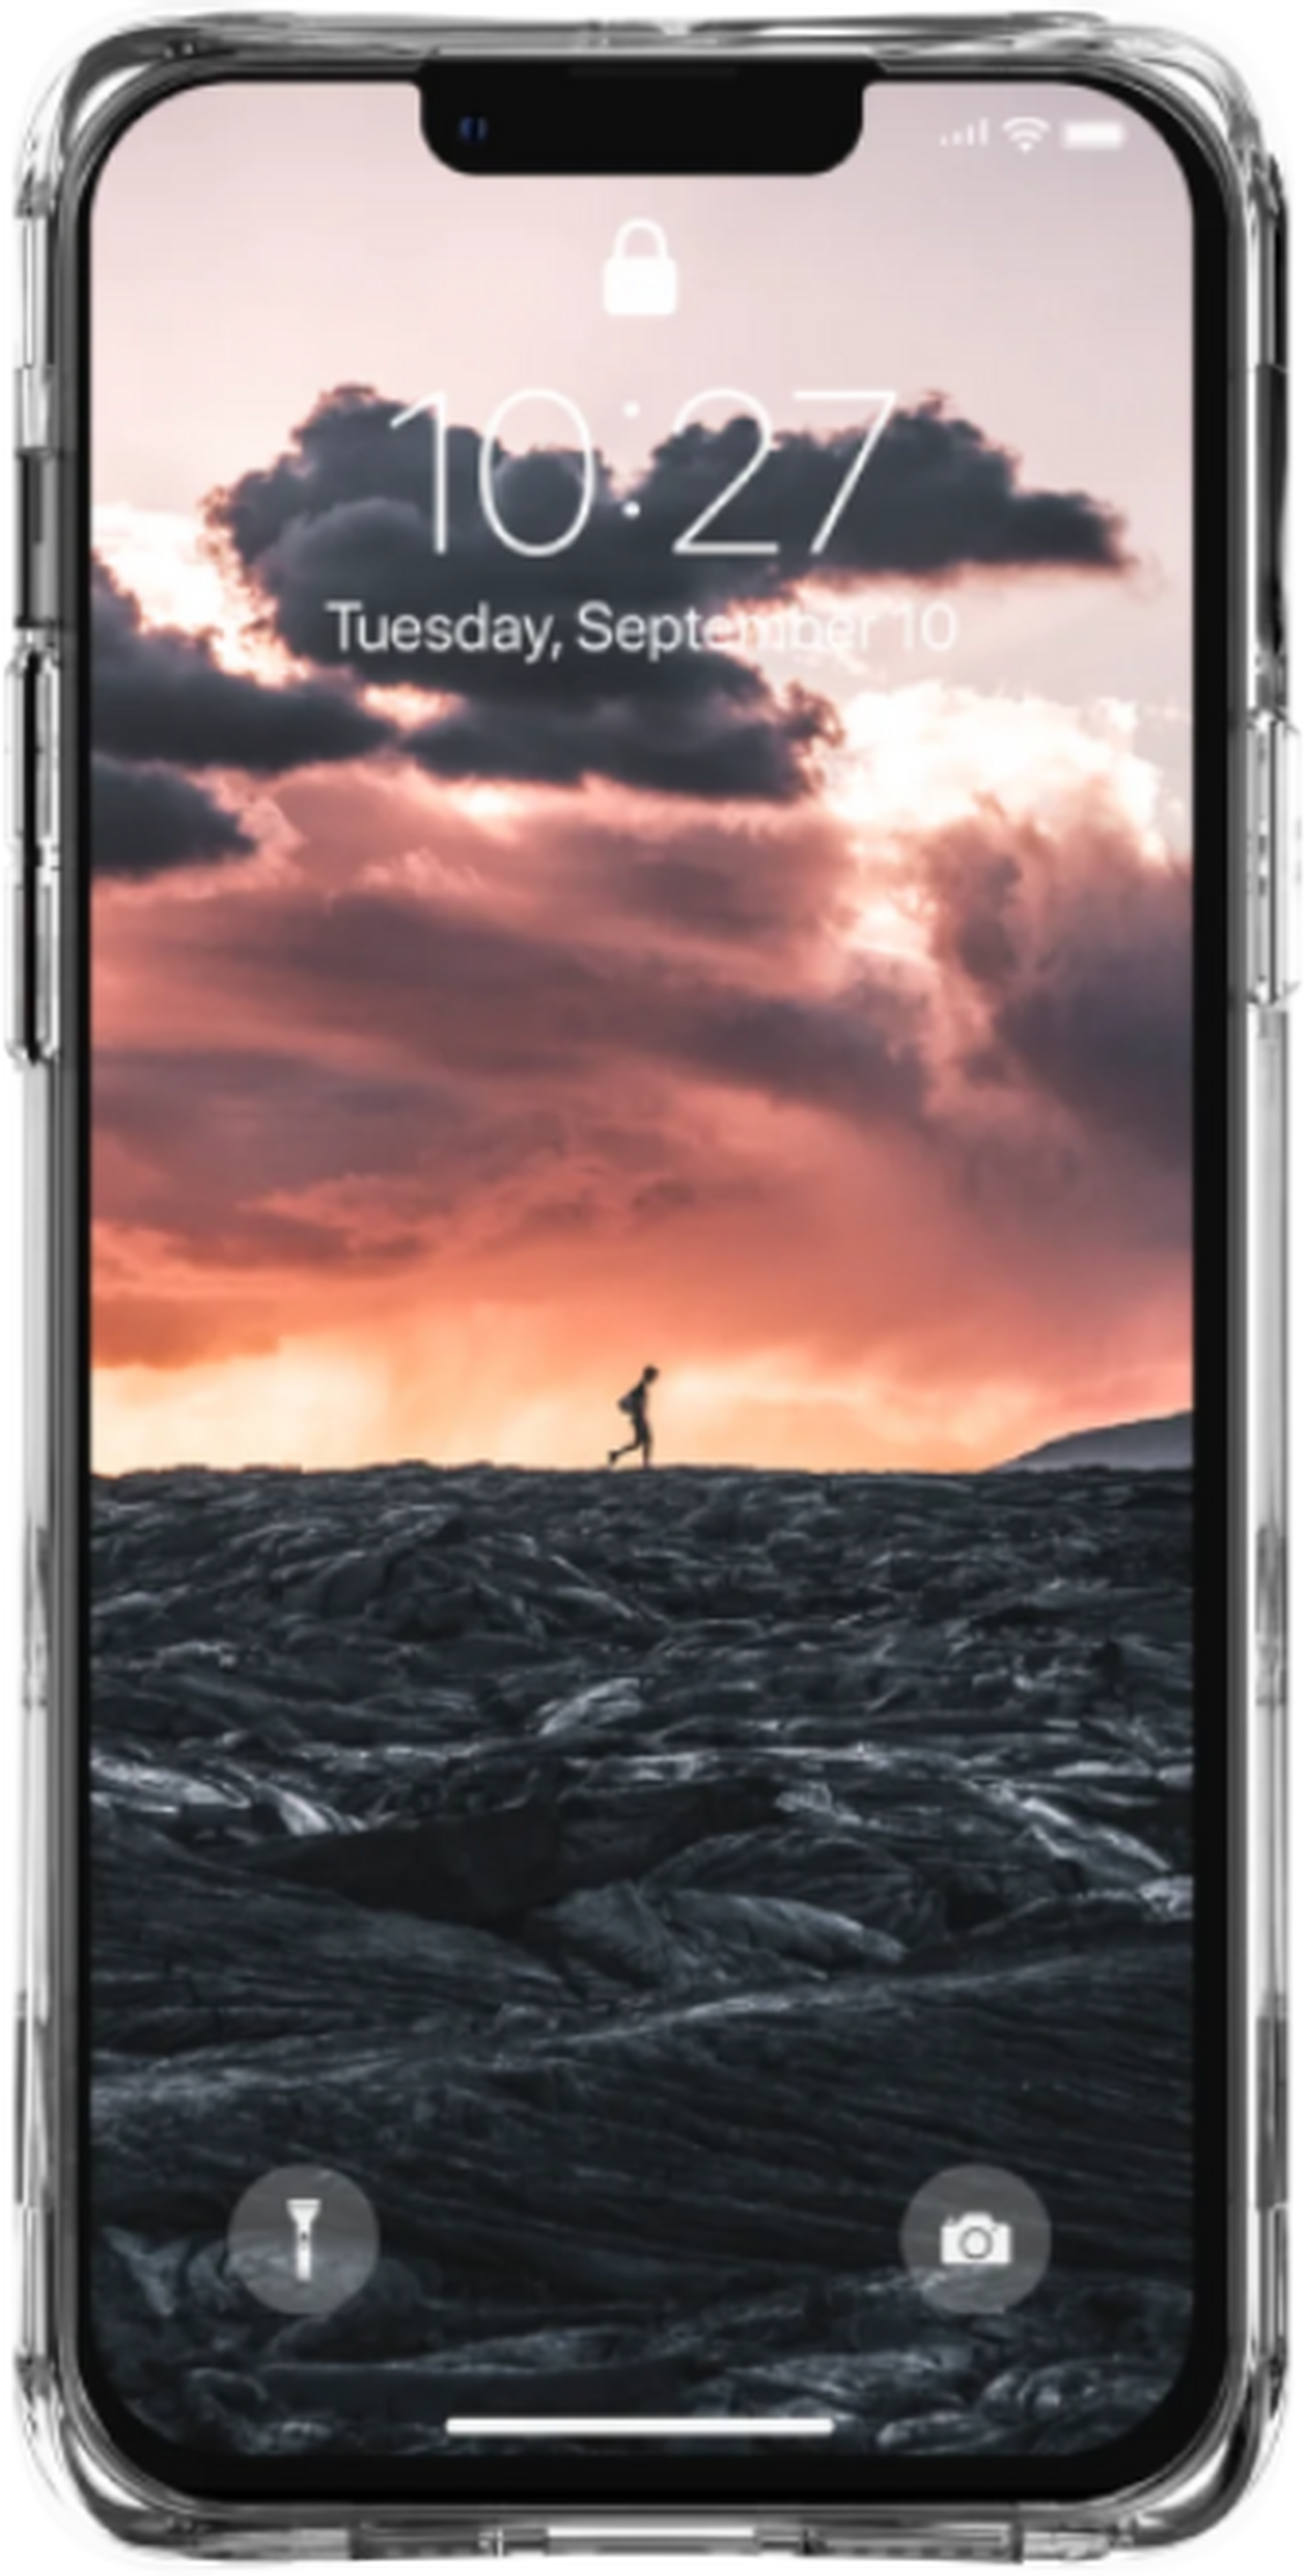 UAG Plyo MagSafe iPhone 13 Pro Max Case - Ice